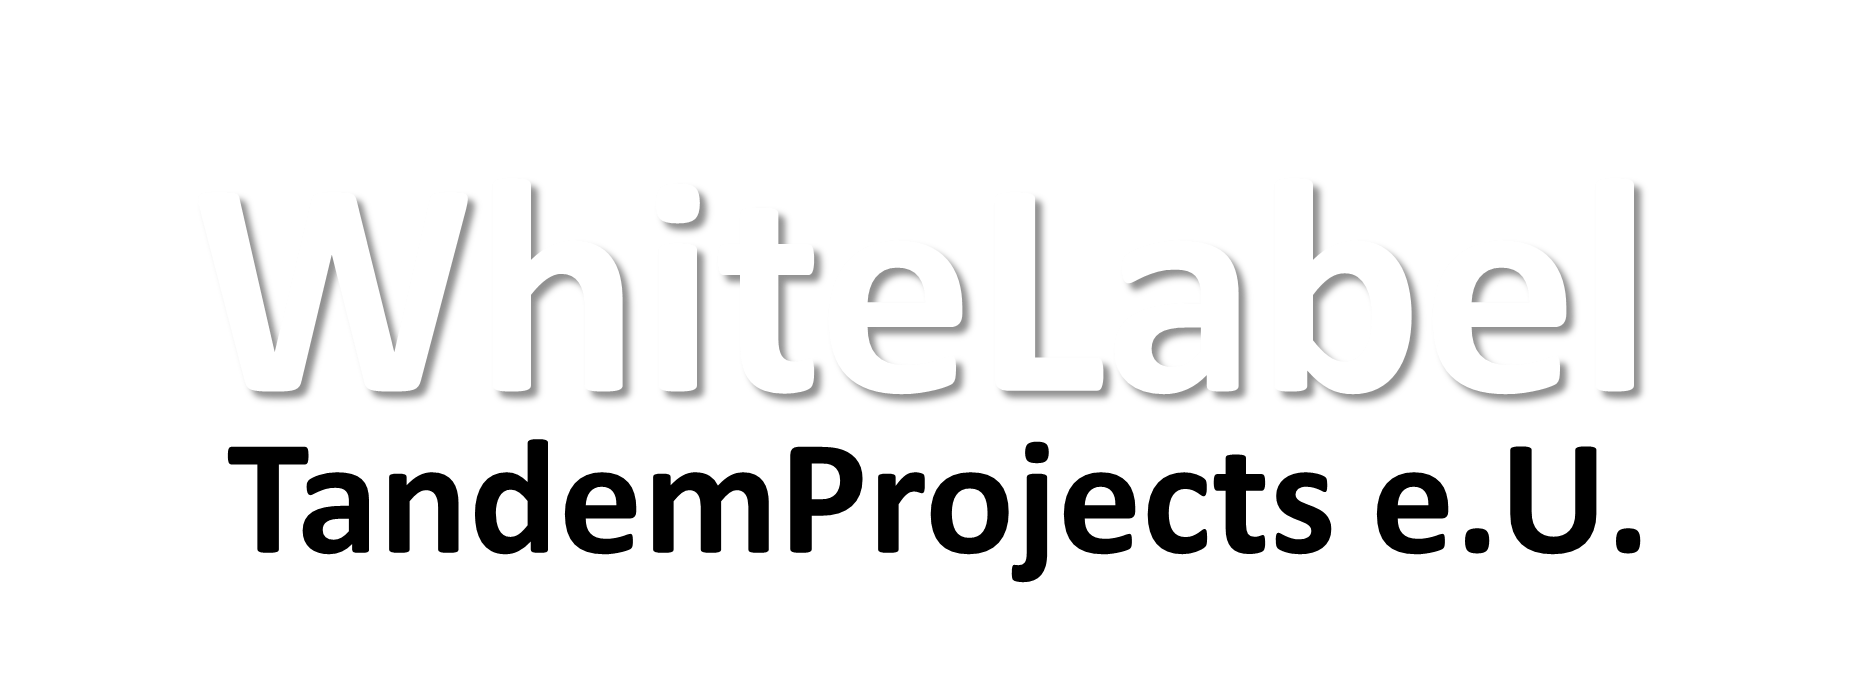 WhiteLabel-TandemProjects e.U.